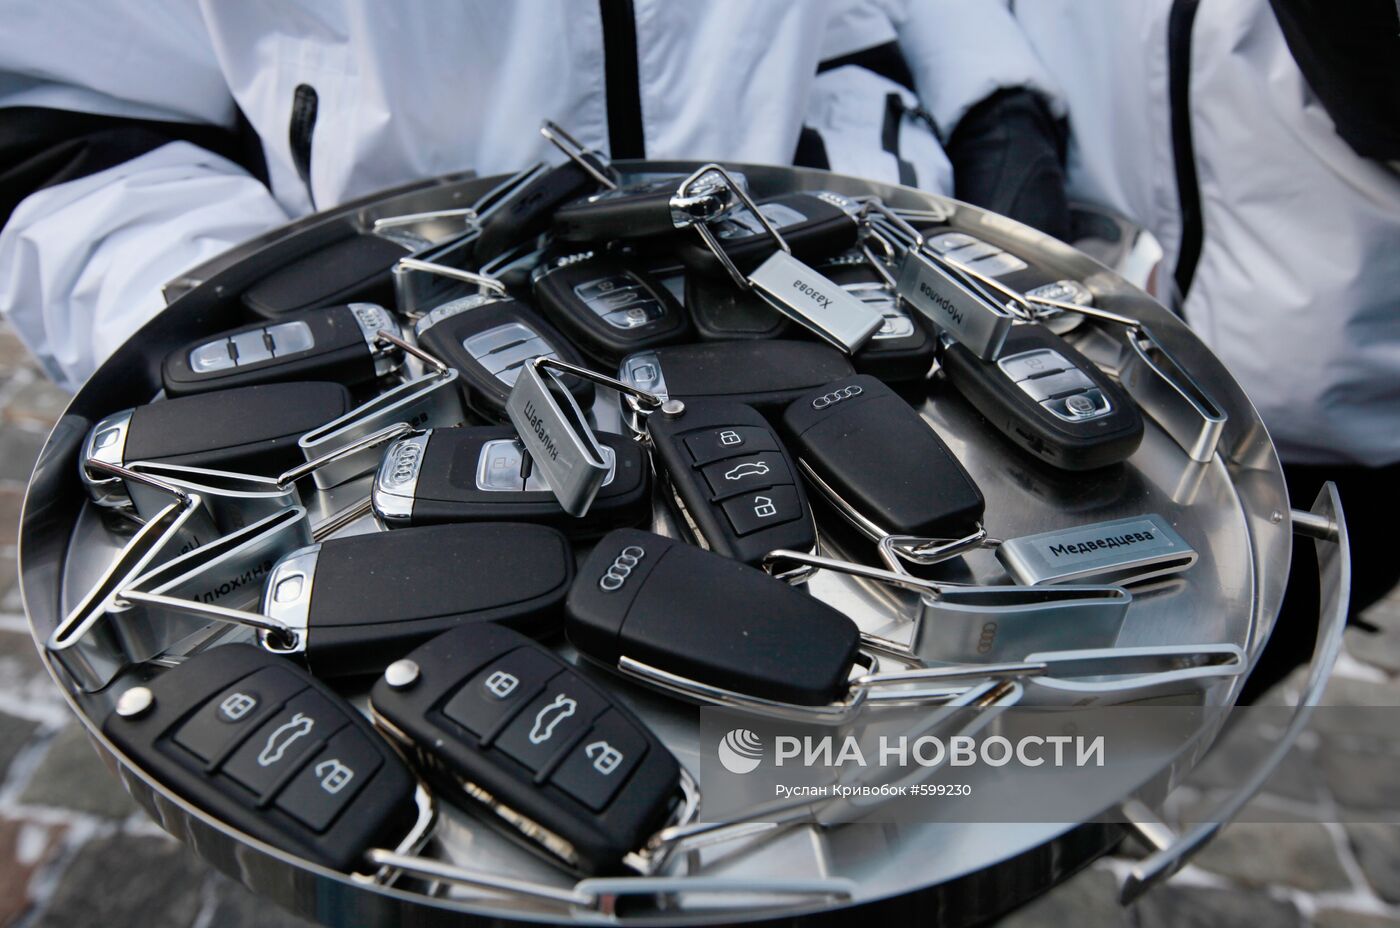 Ключи от автоимобилей немецкой марки Audi